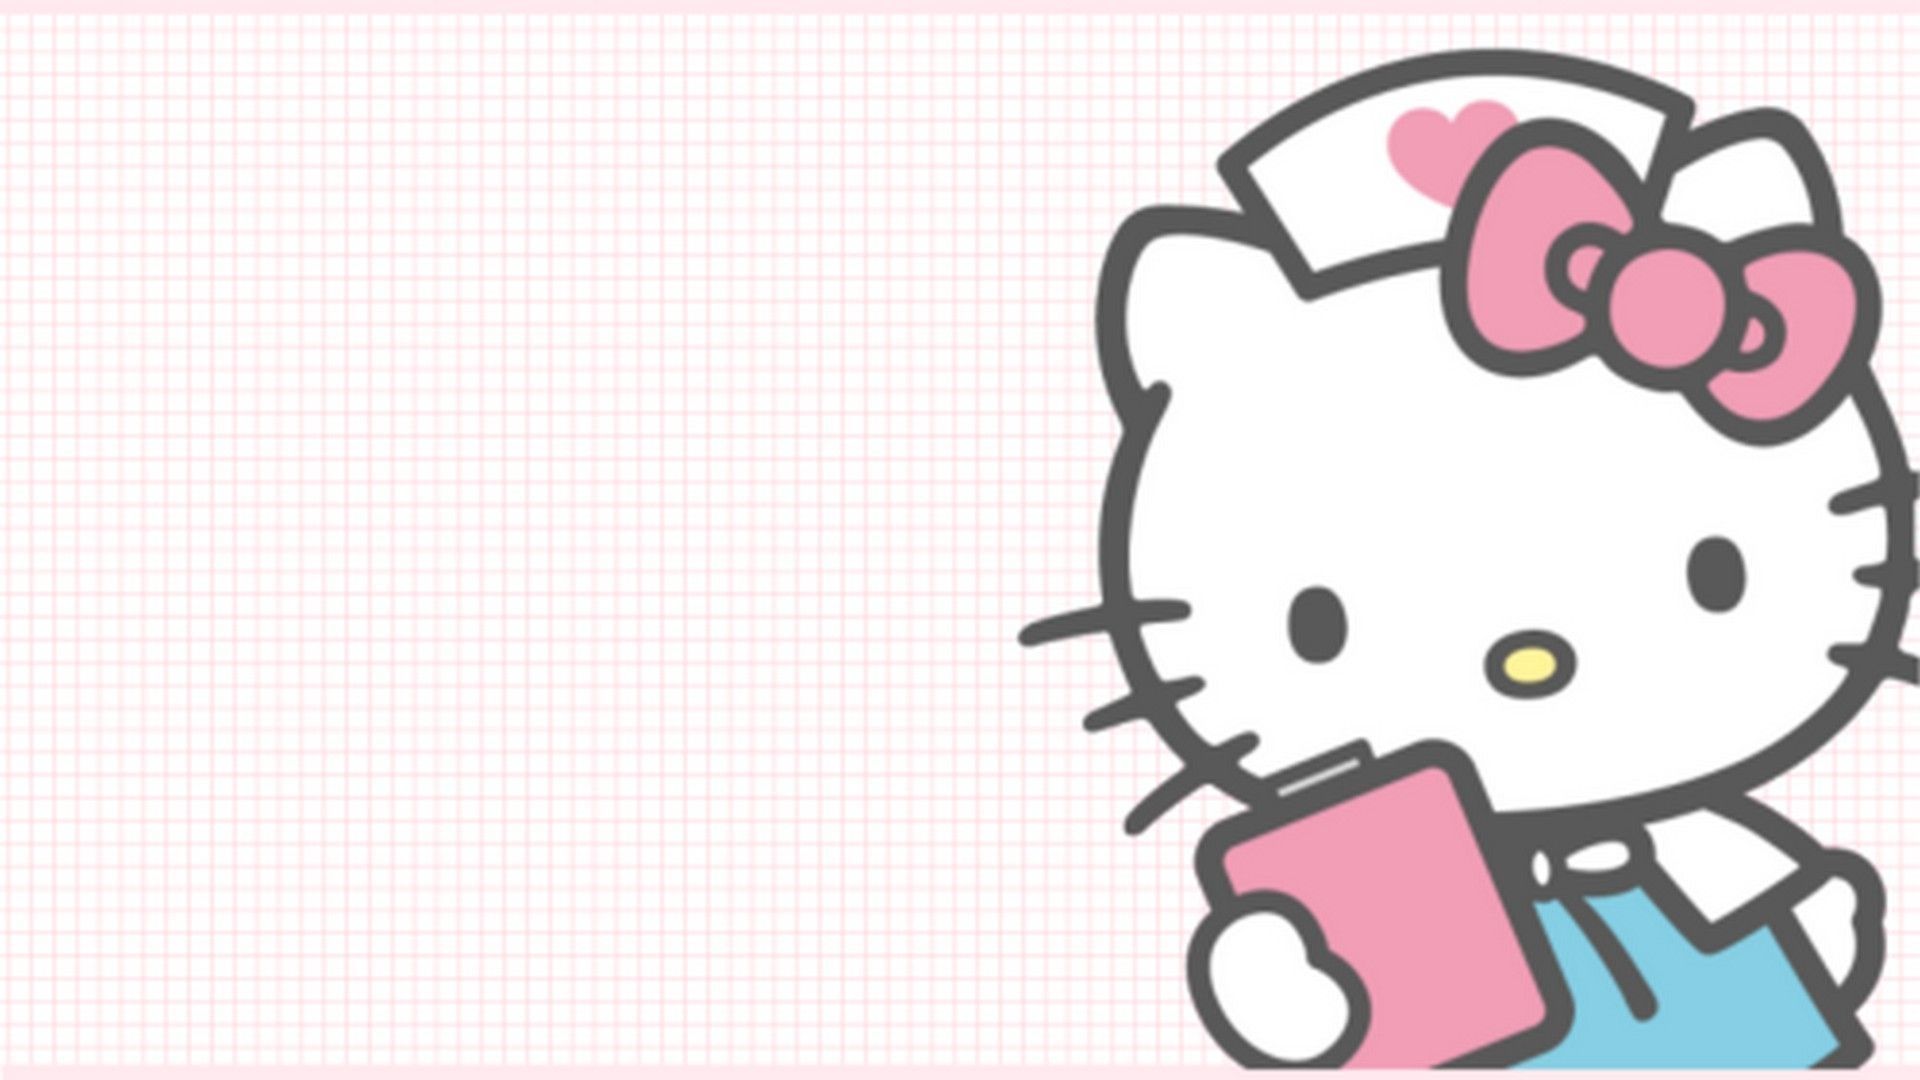 Tumblr Hello Kitty Desktop Wallpaper Top Free Tumblr inside Hello Kitty Wallpap. Trend en 2020. Cosas de hello kitty, Hello kitty, Fondos de hello kitty